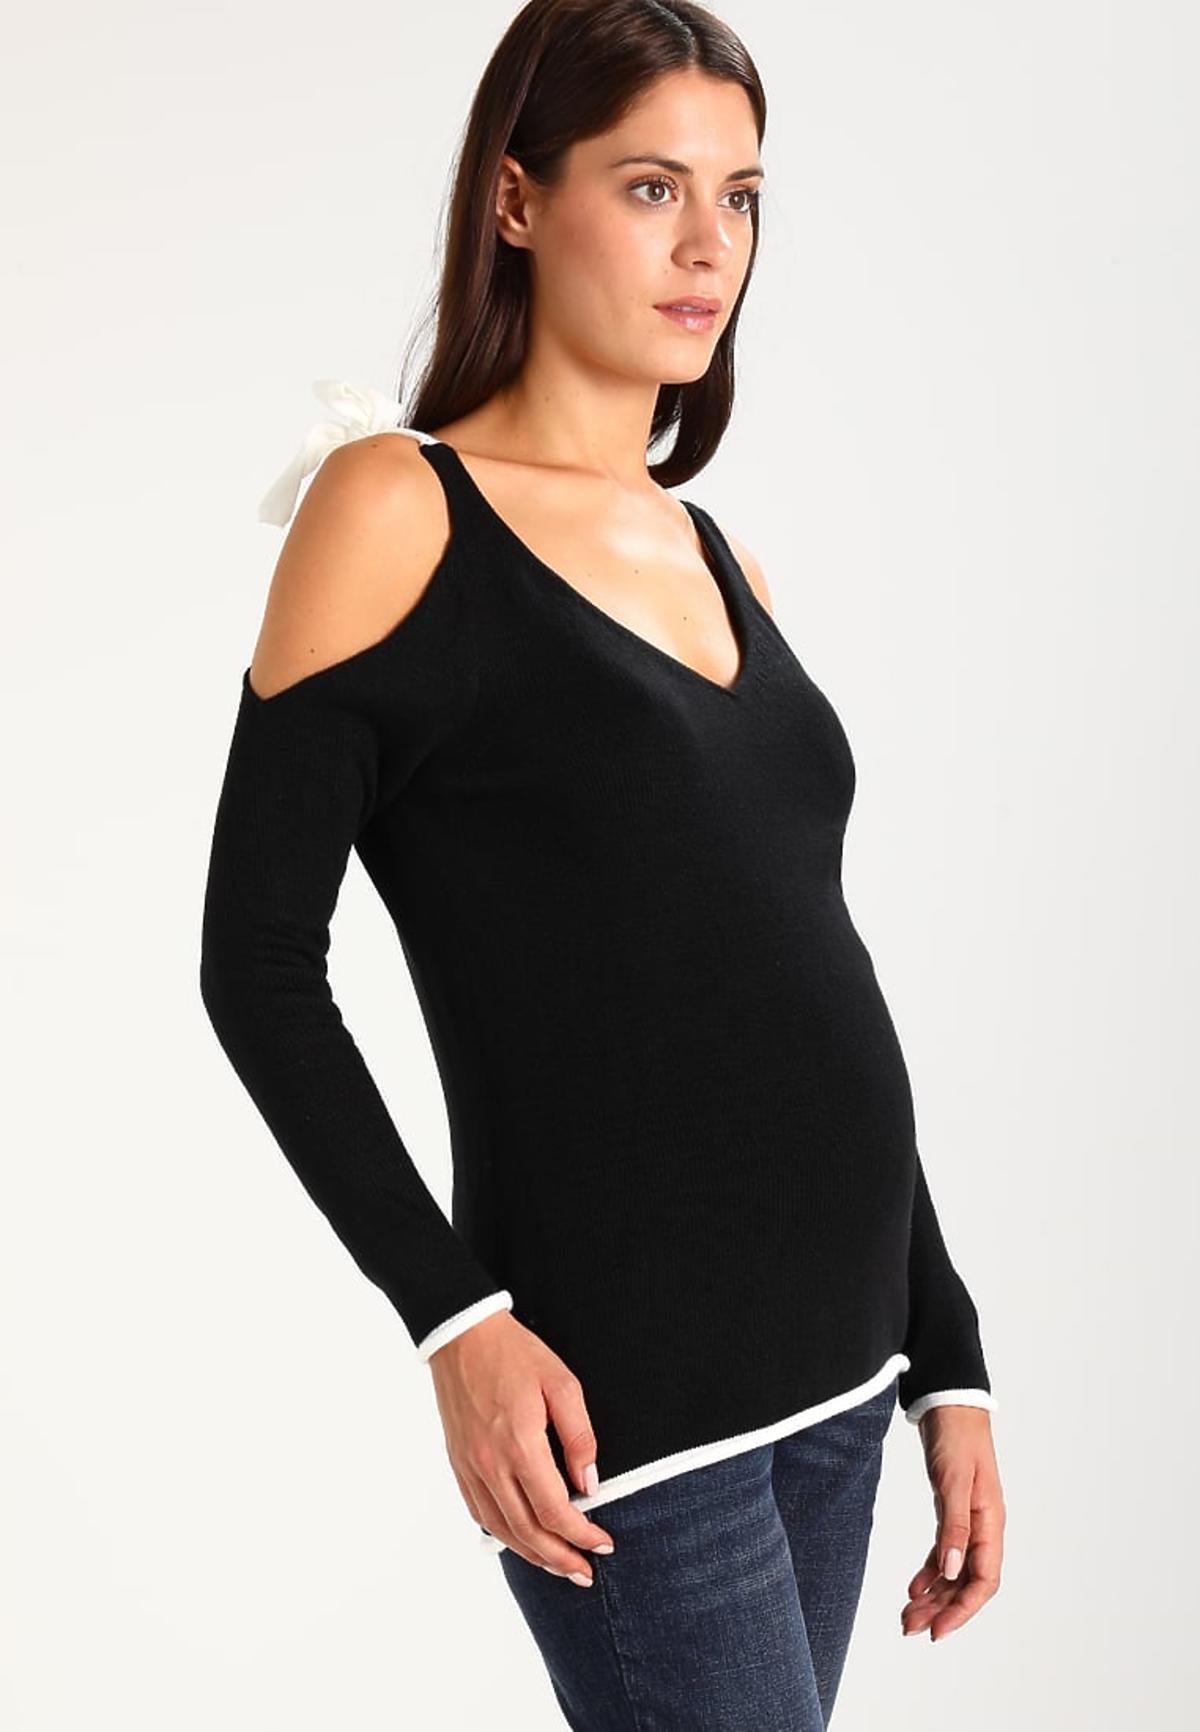 seksowny sweterek ciążowy czarny dekolt i cold shoulder.jpg